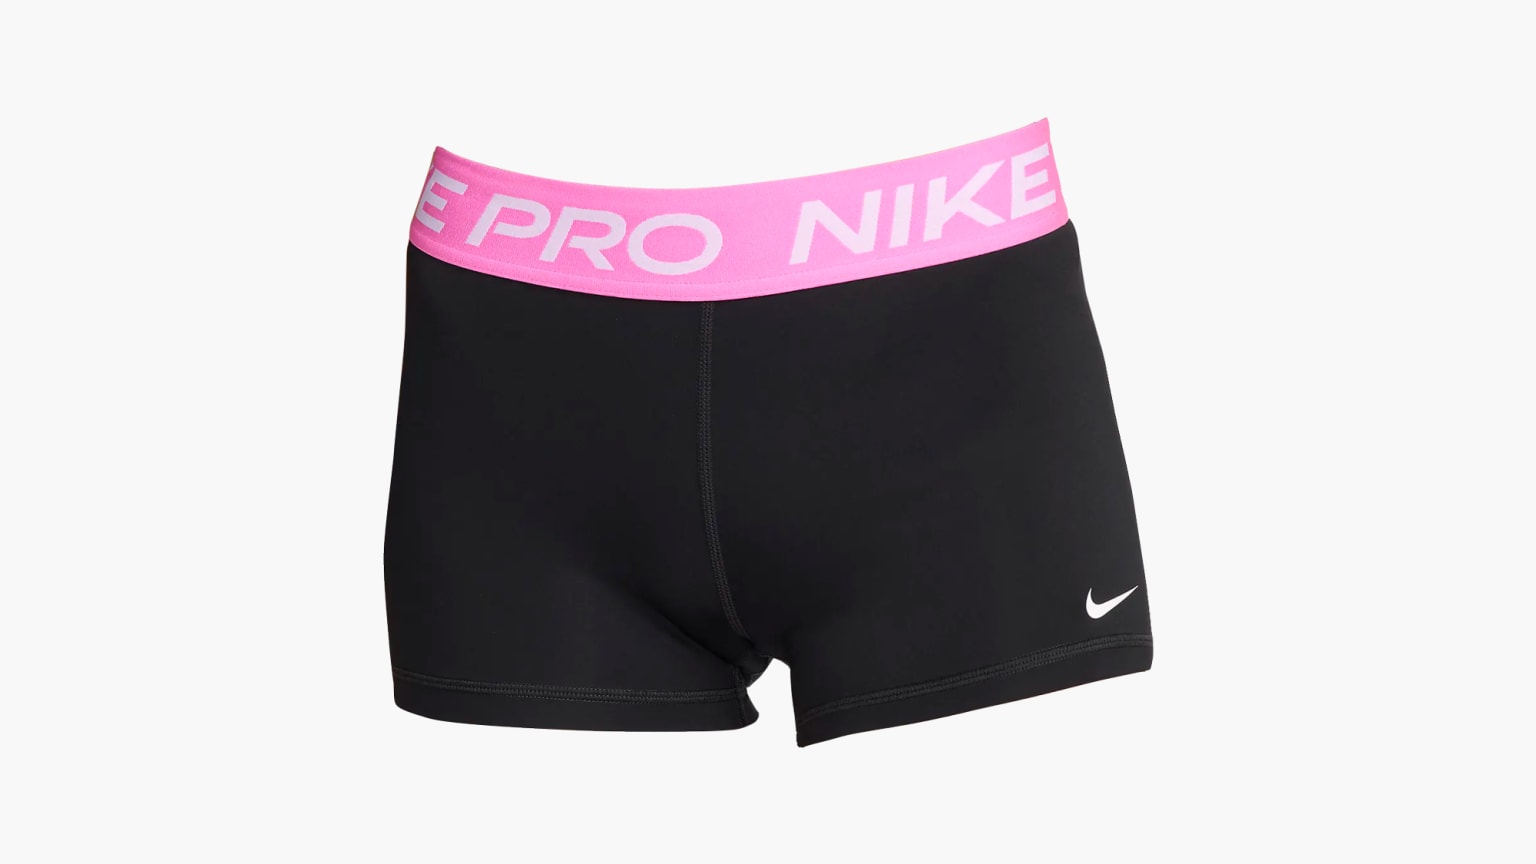 Nike Nike Pro Training Crossover Shorts in Black